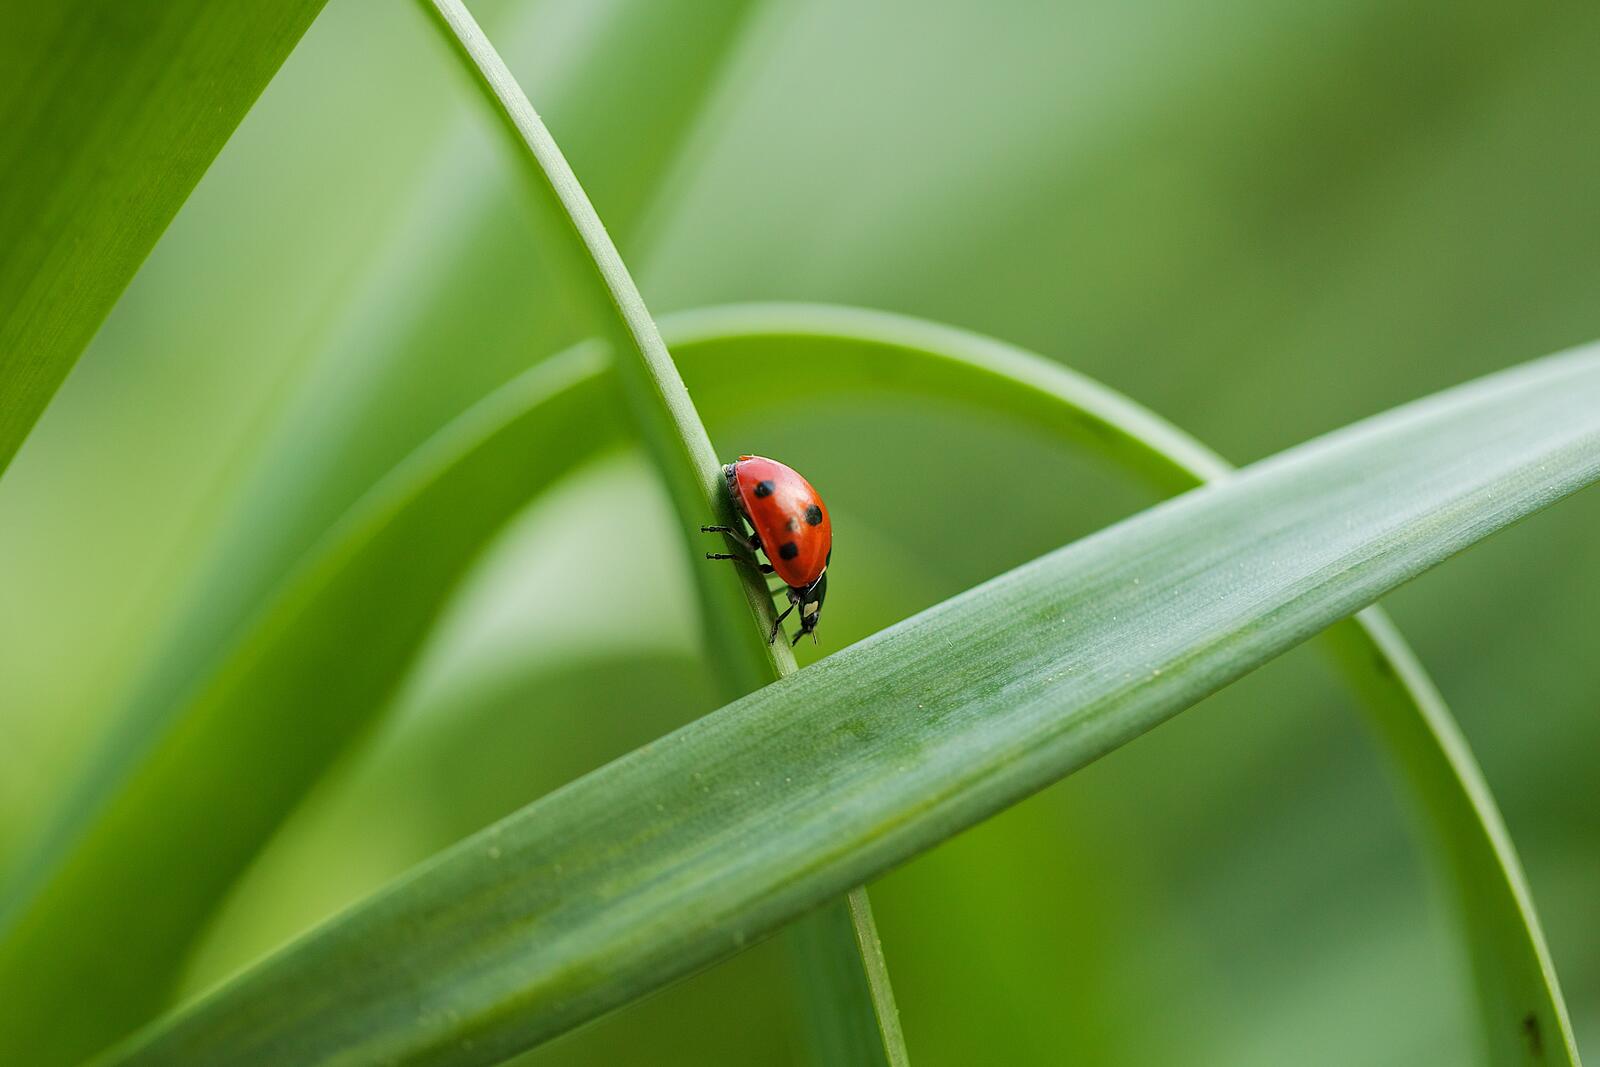 Wallpapers green grass grass ladybug on the desktop